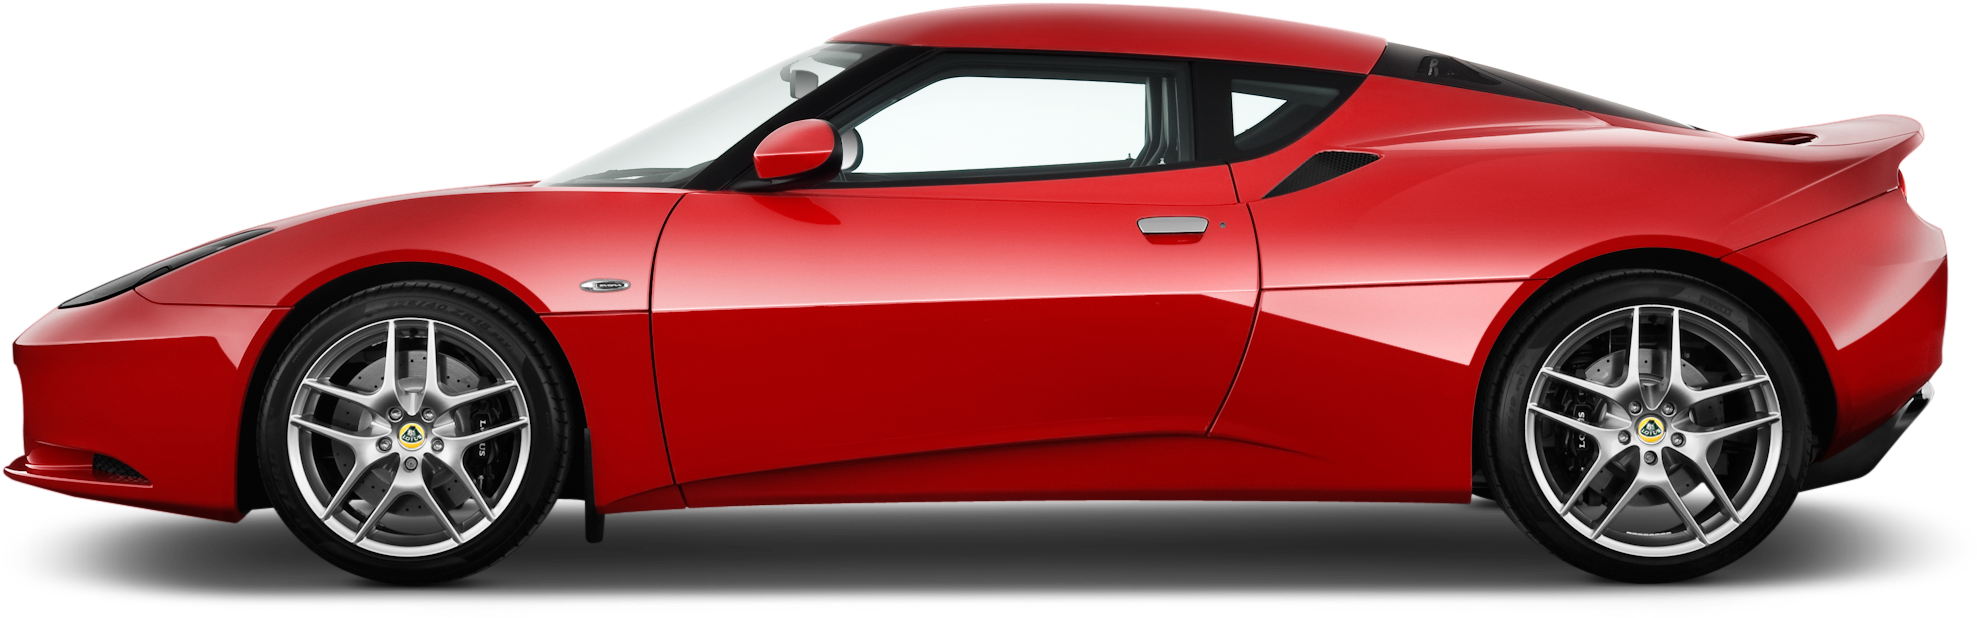 Red Ferrari Side Profile PNG